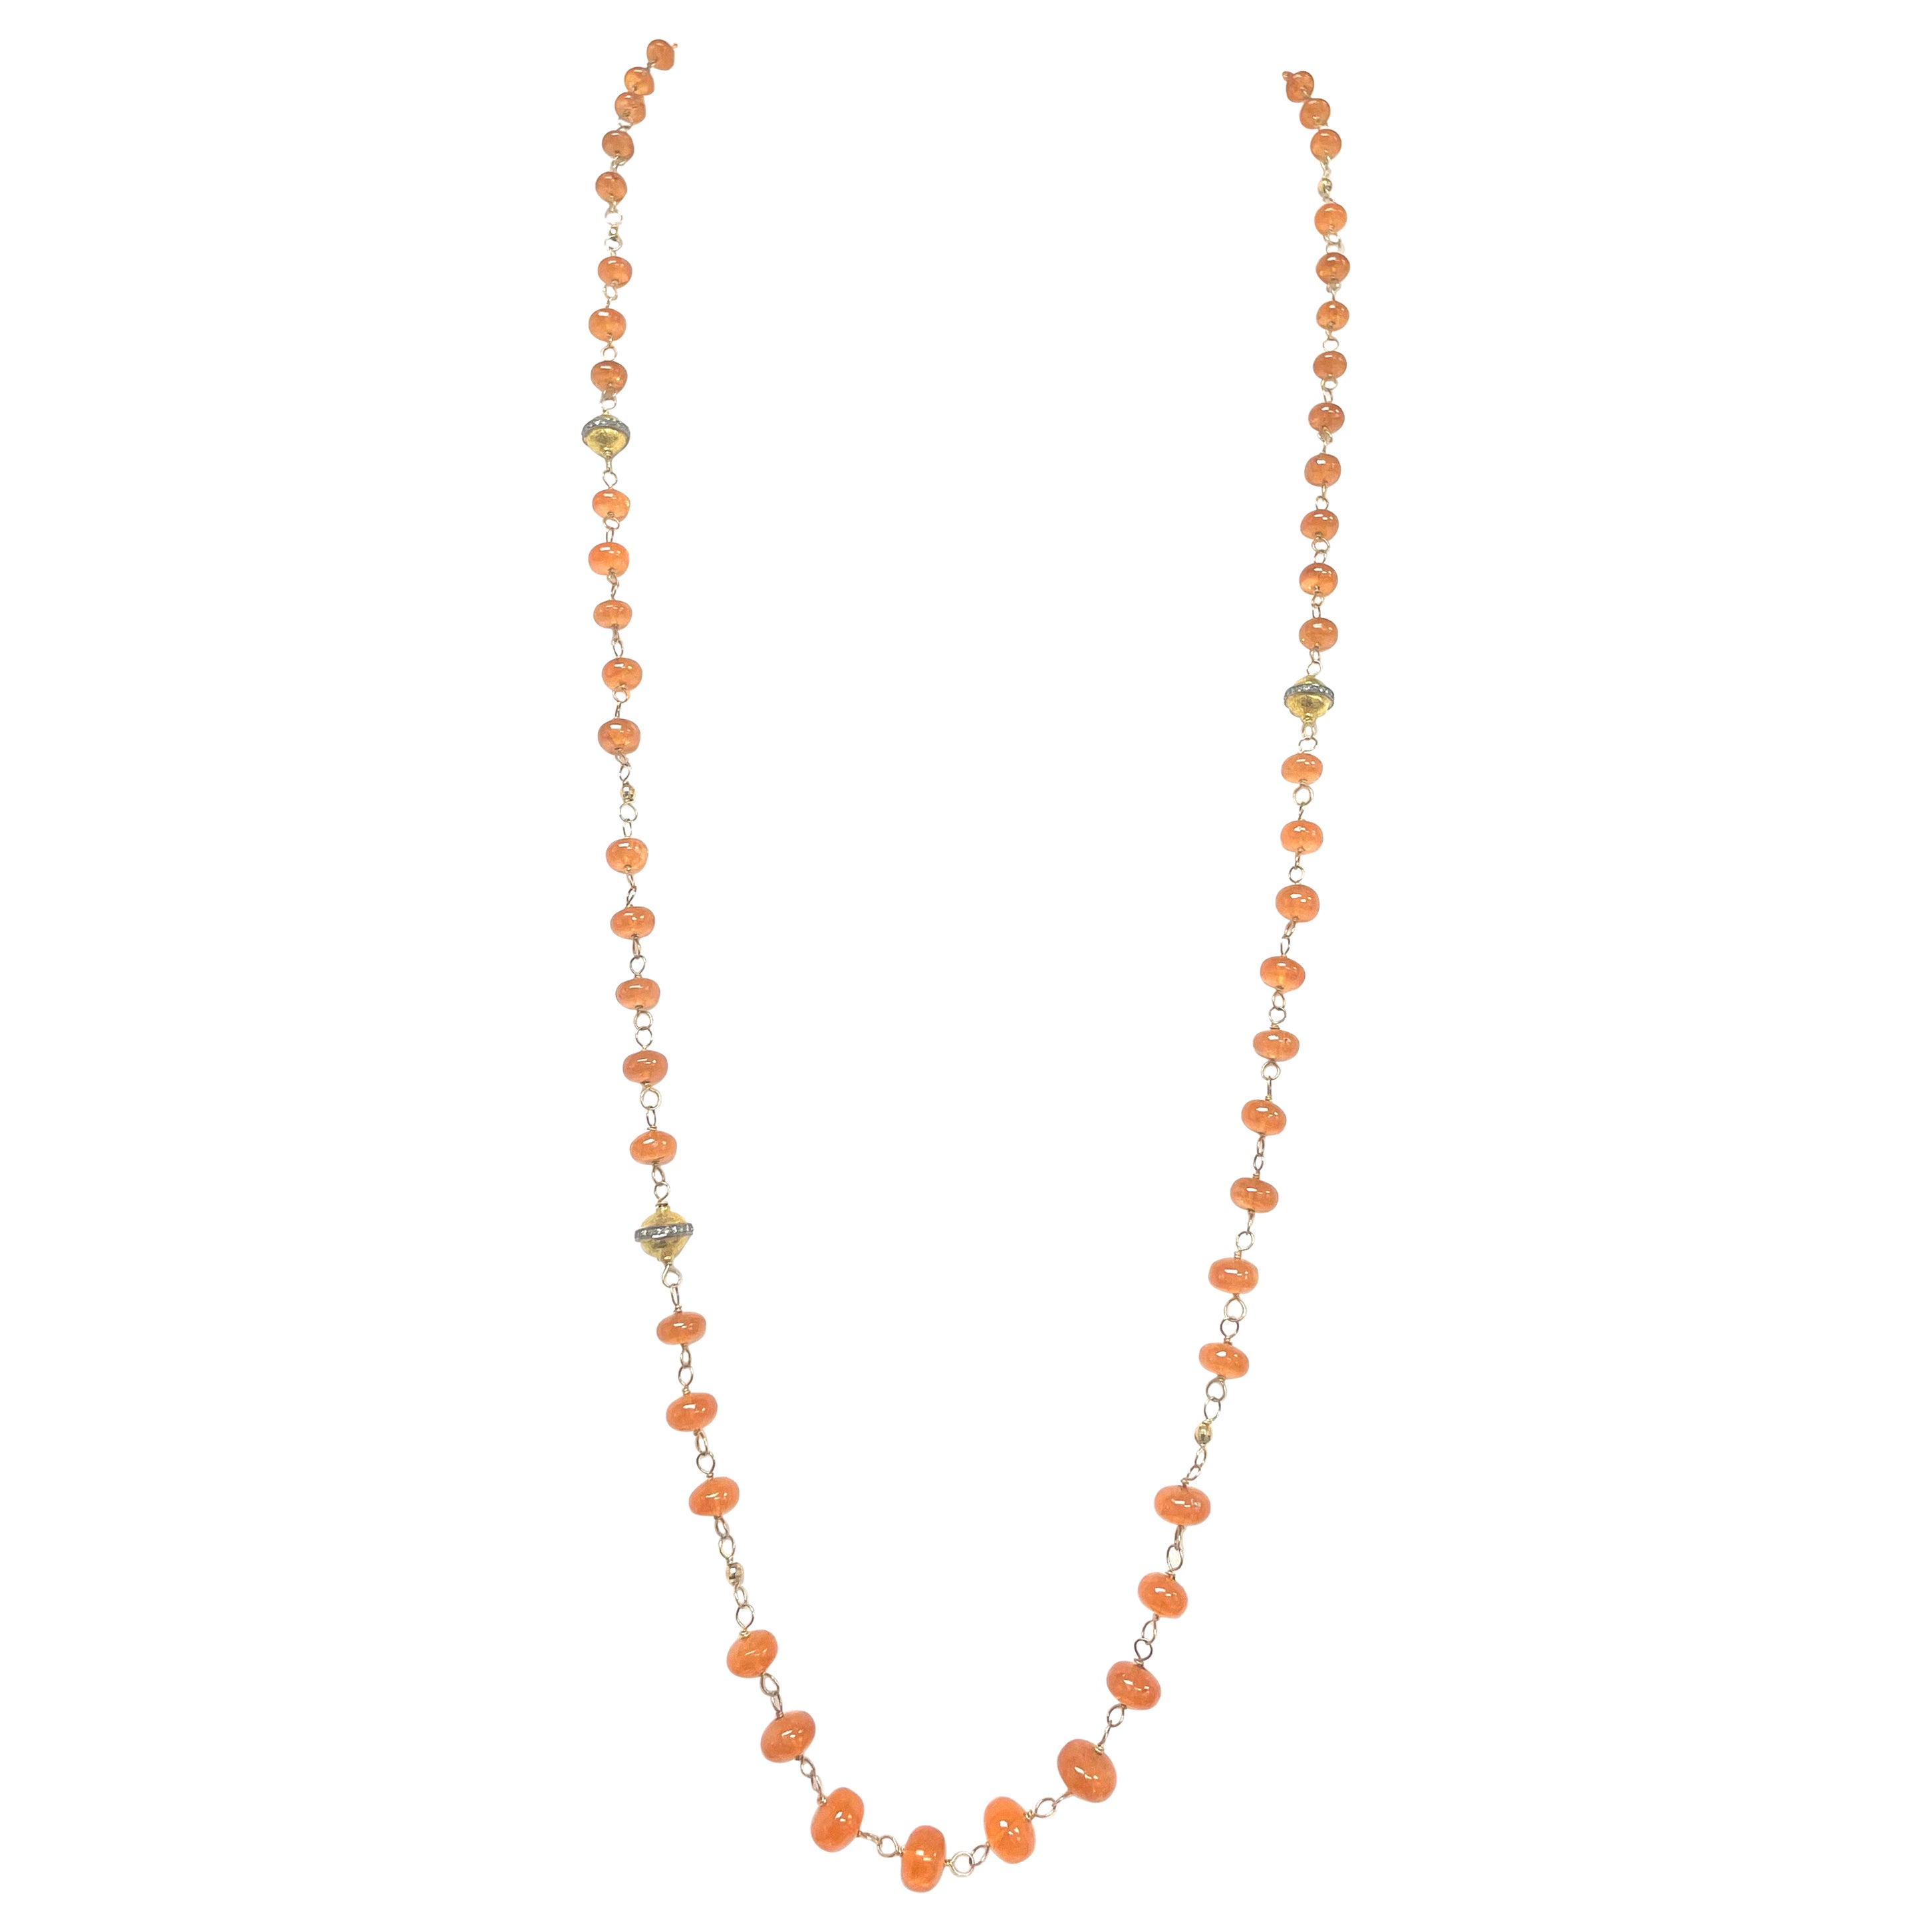 206 Carats Orange Spessartite Necklace with Diamond Accents